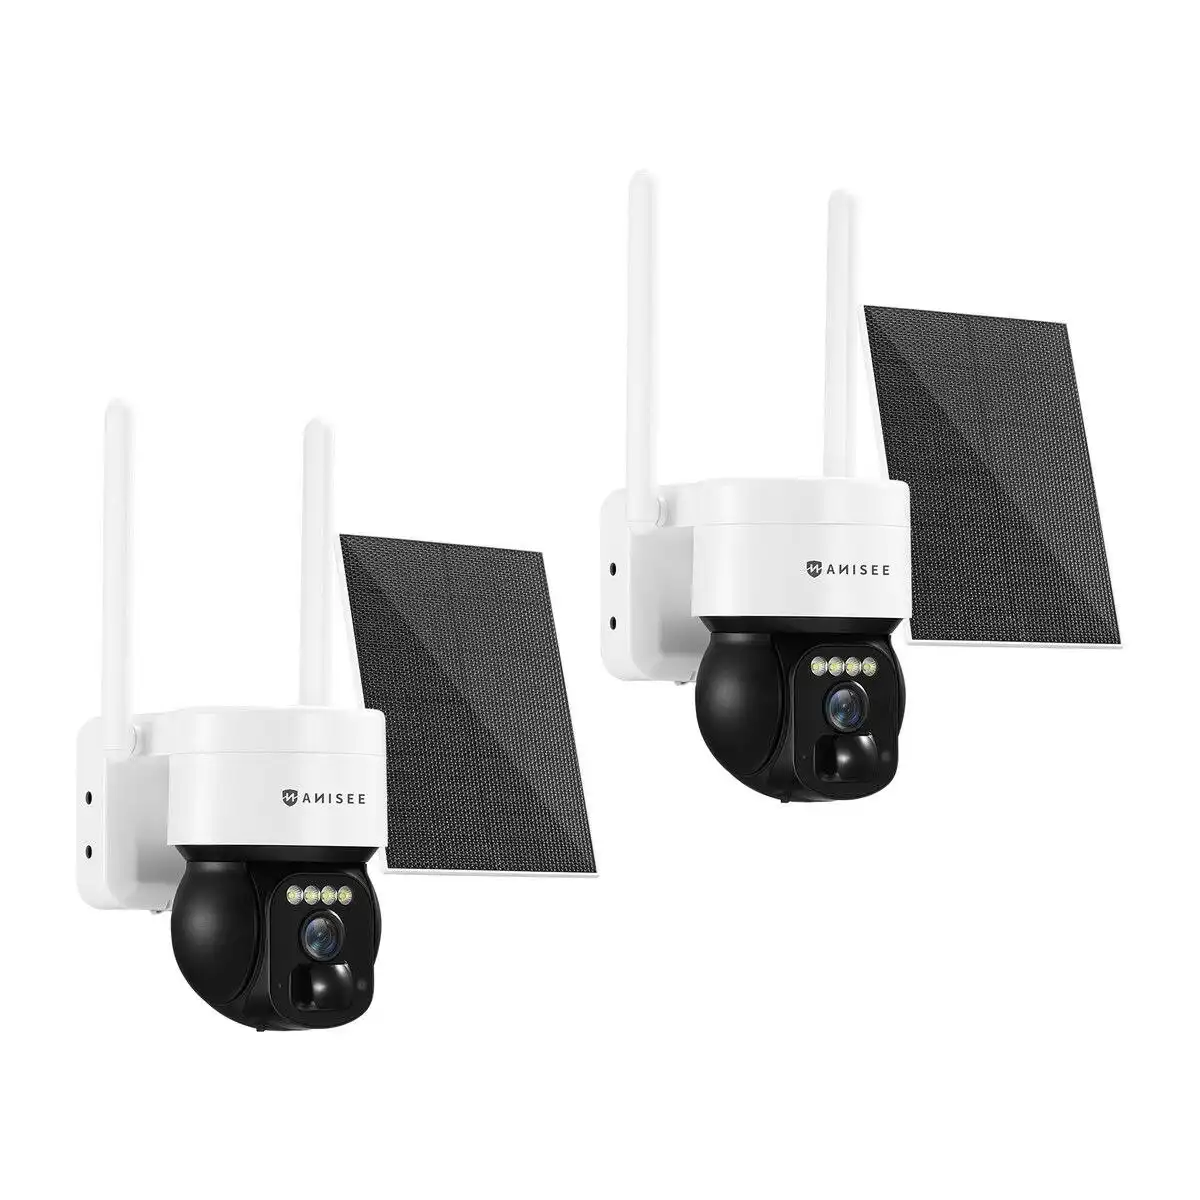 Anisee Solar WIFI Security Camerax2 Battery Outdoor Wireless CCTV PTZ Spy Surveillance 2K  Home Dual Lens 5dBi 3MP PIR Detect Night Vision IP66